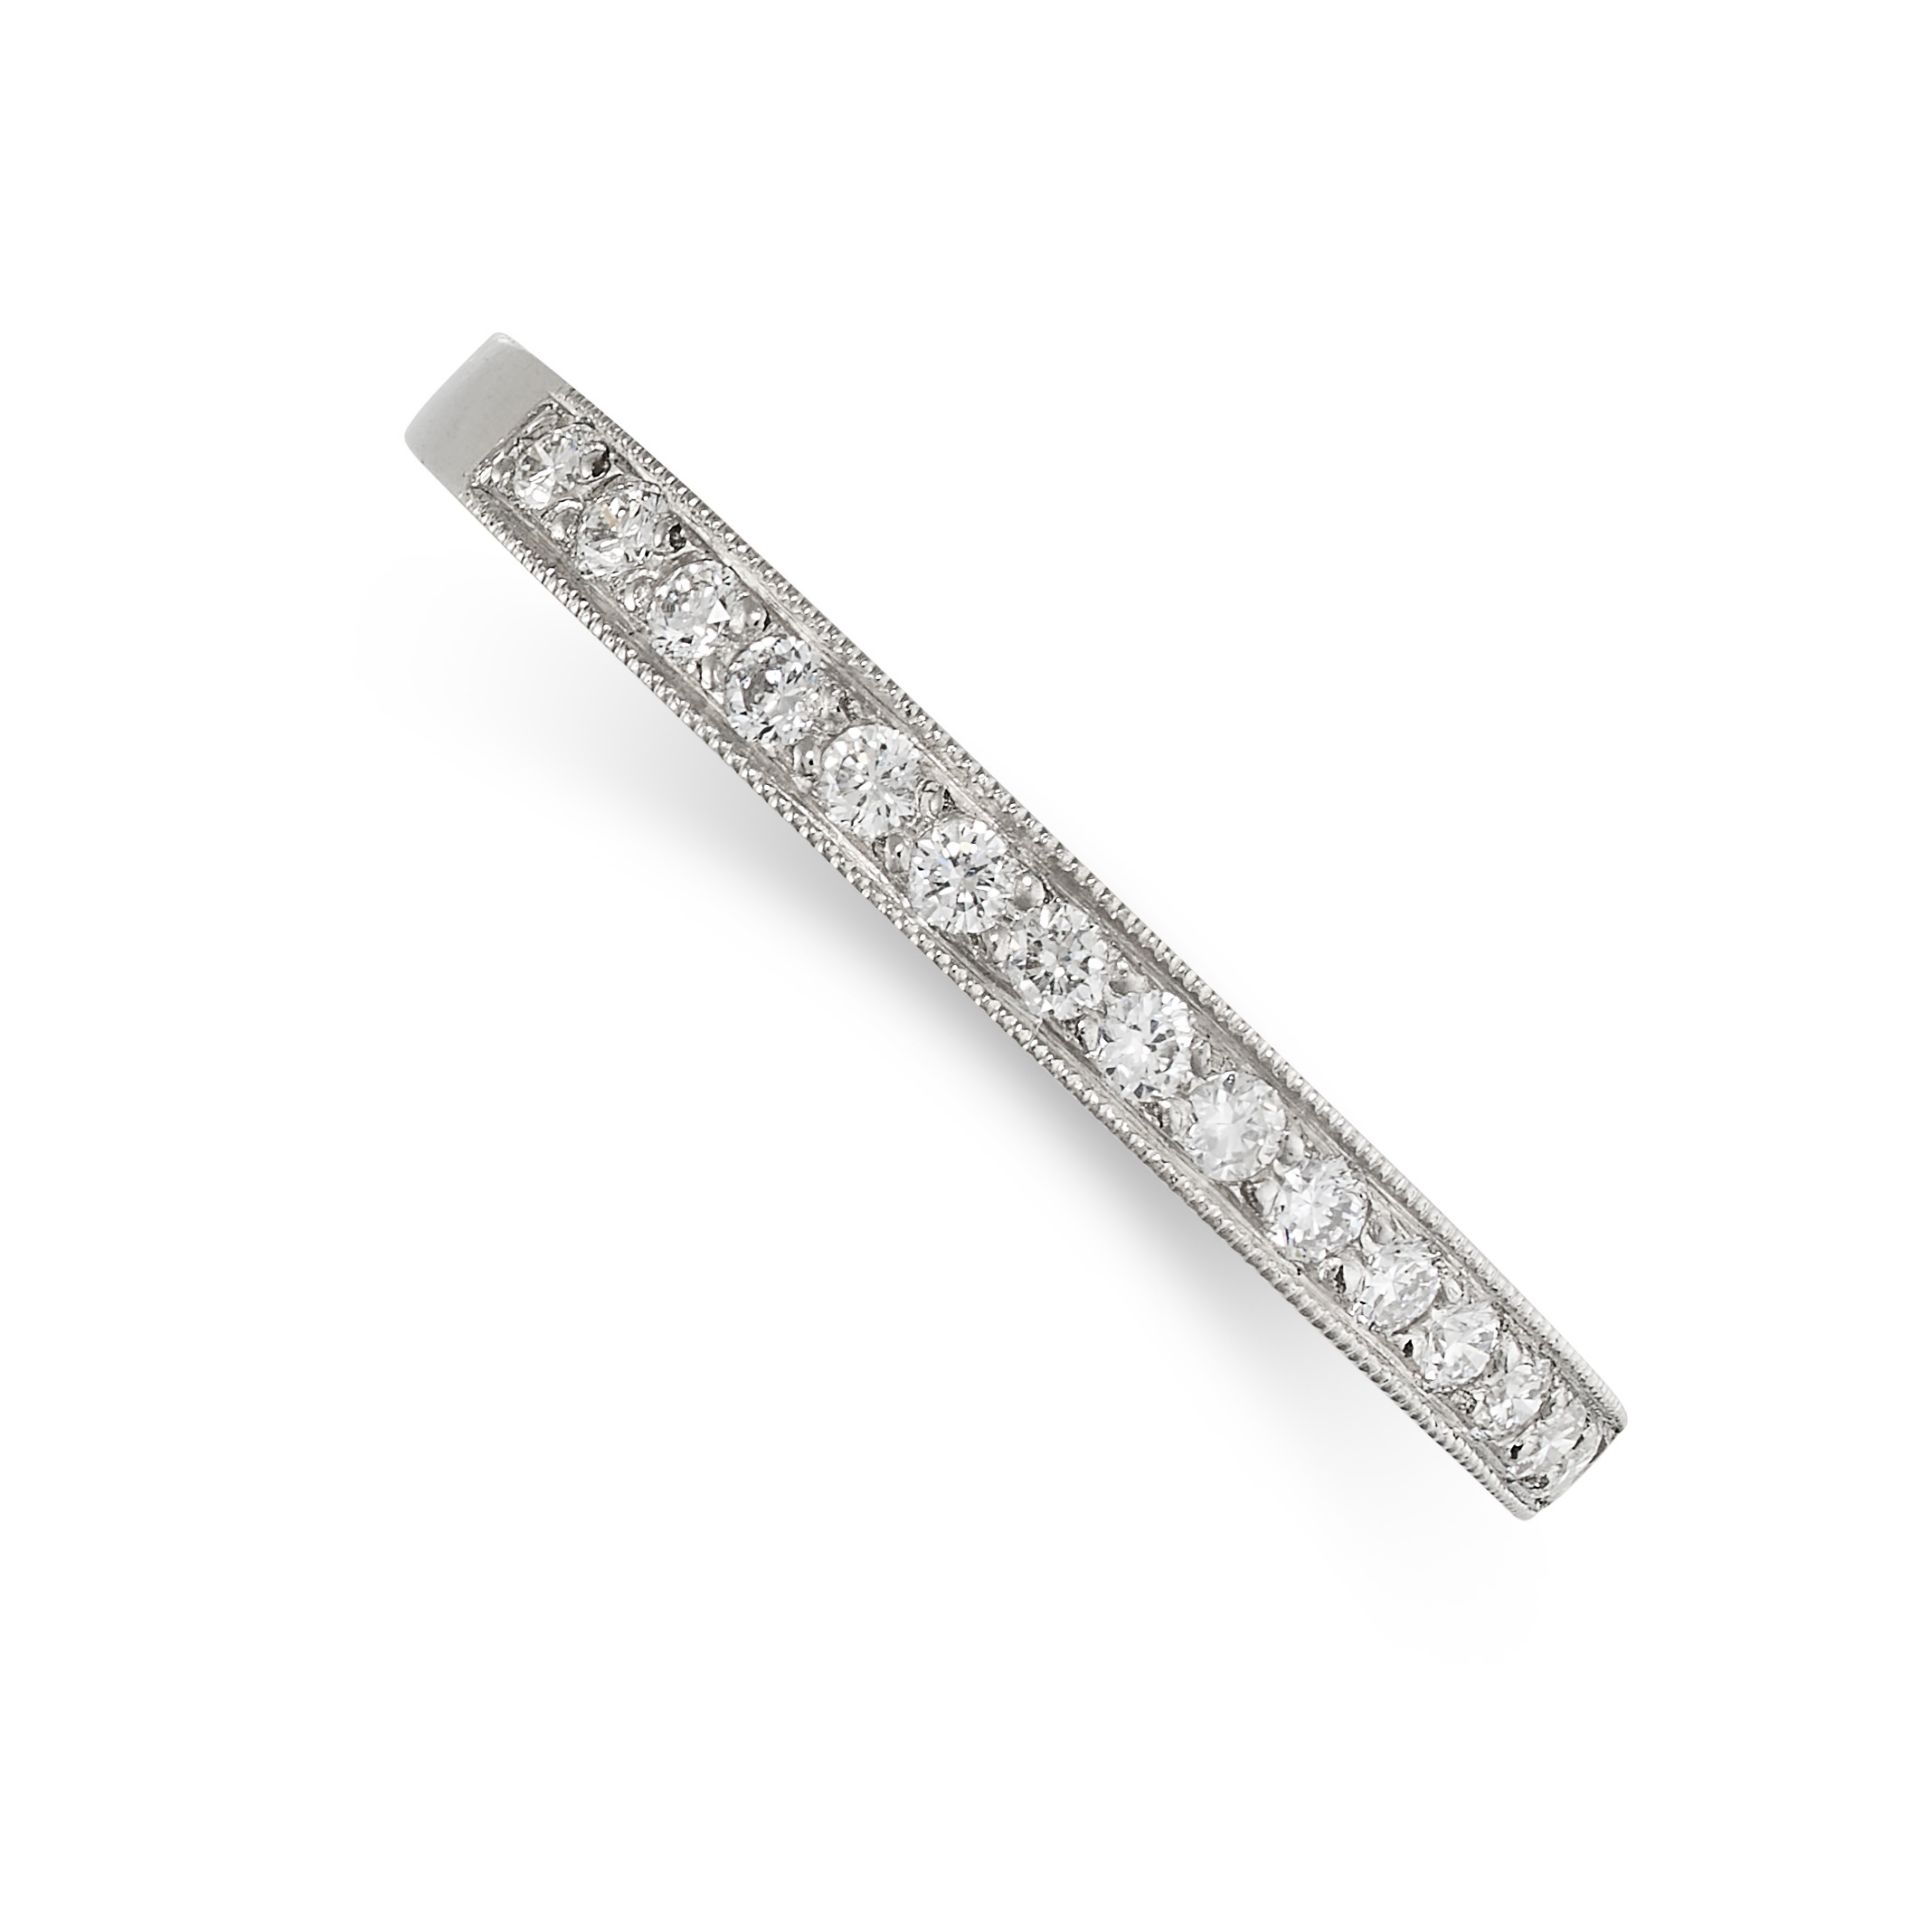 A DIAMOND HALF ETERNITY RING set with a row of single cut diamonds, no assay marks, size Q / 8, 2.